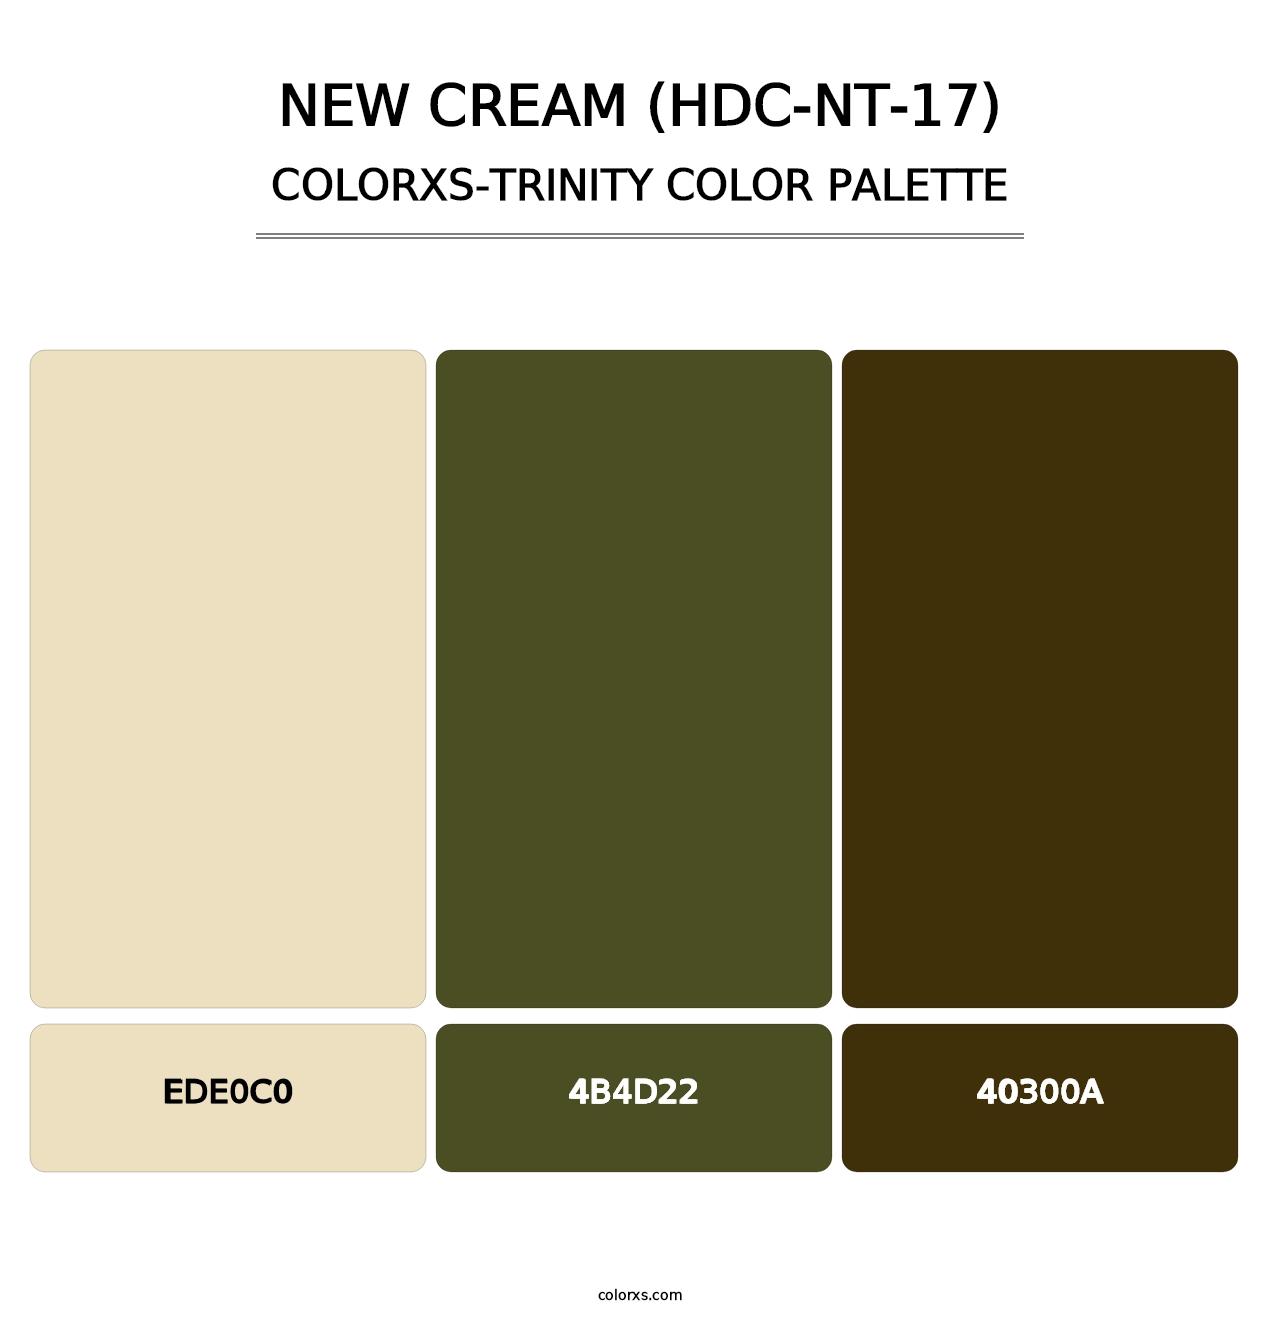 New Cream (HDC-NT-17) - Colorxs Trinity Palette